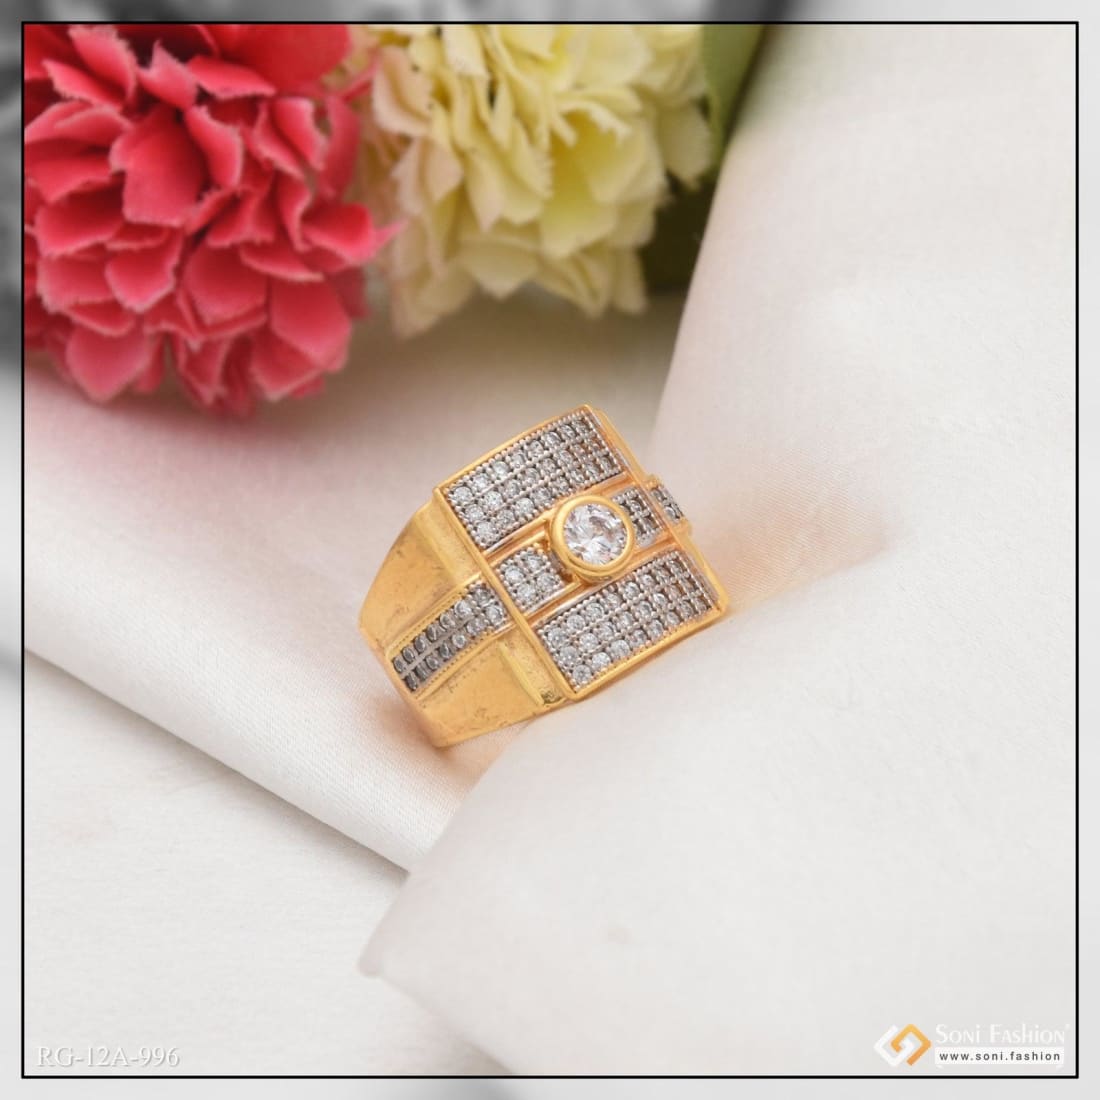 sun star design natural diamond jewelry| Alibaba.com